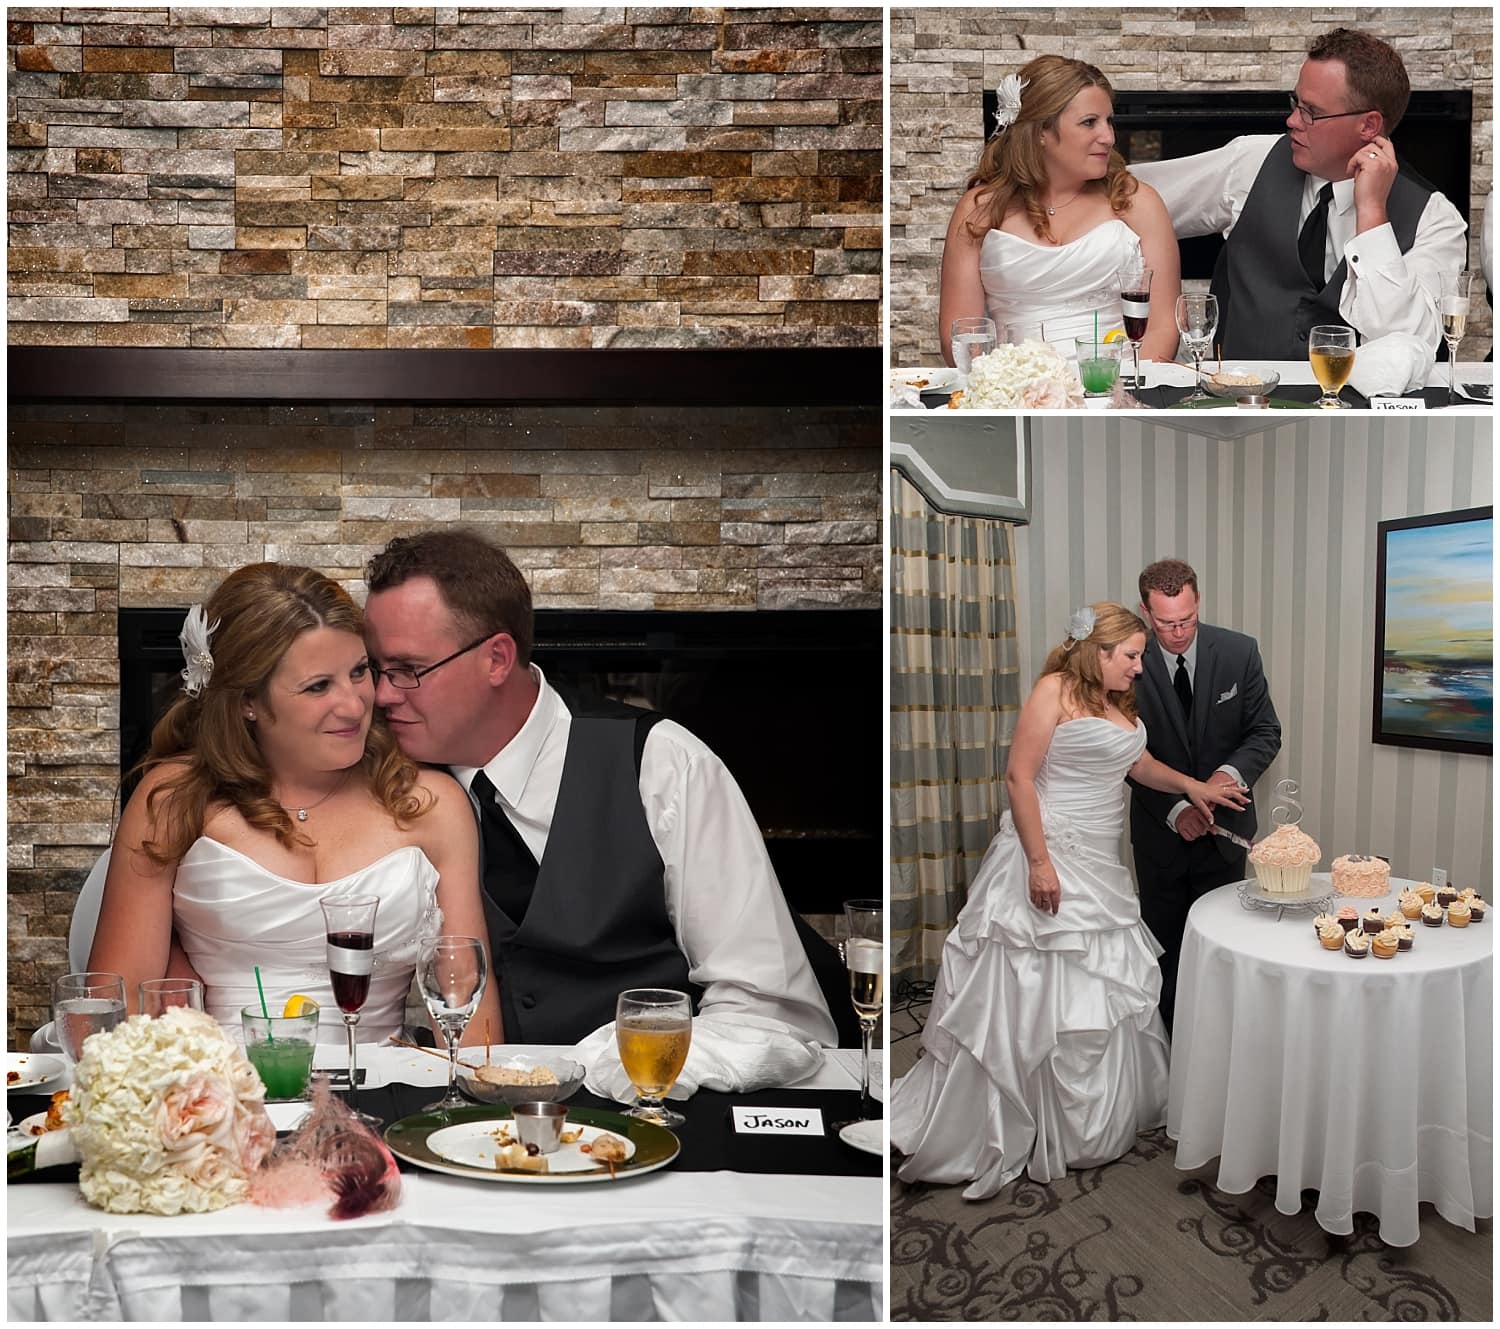 The bride and groom cut their wedding cupcake during their wedding reception at Ashburn Golf Club in Halifax, NS.